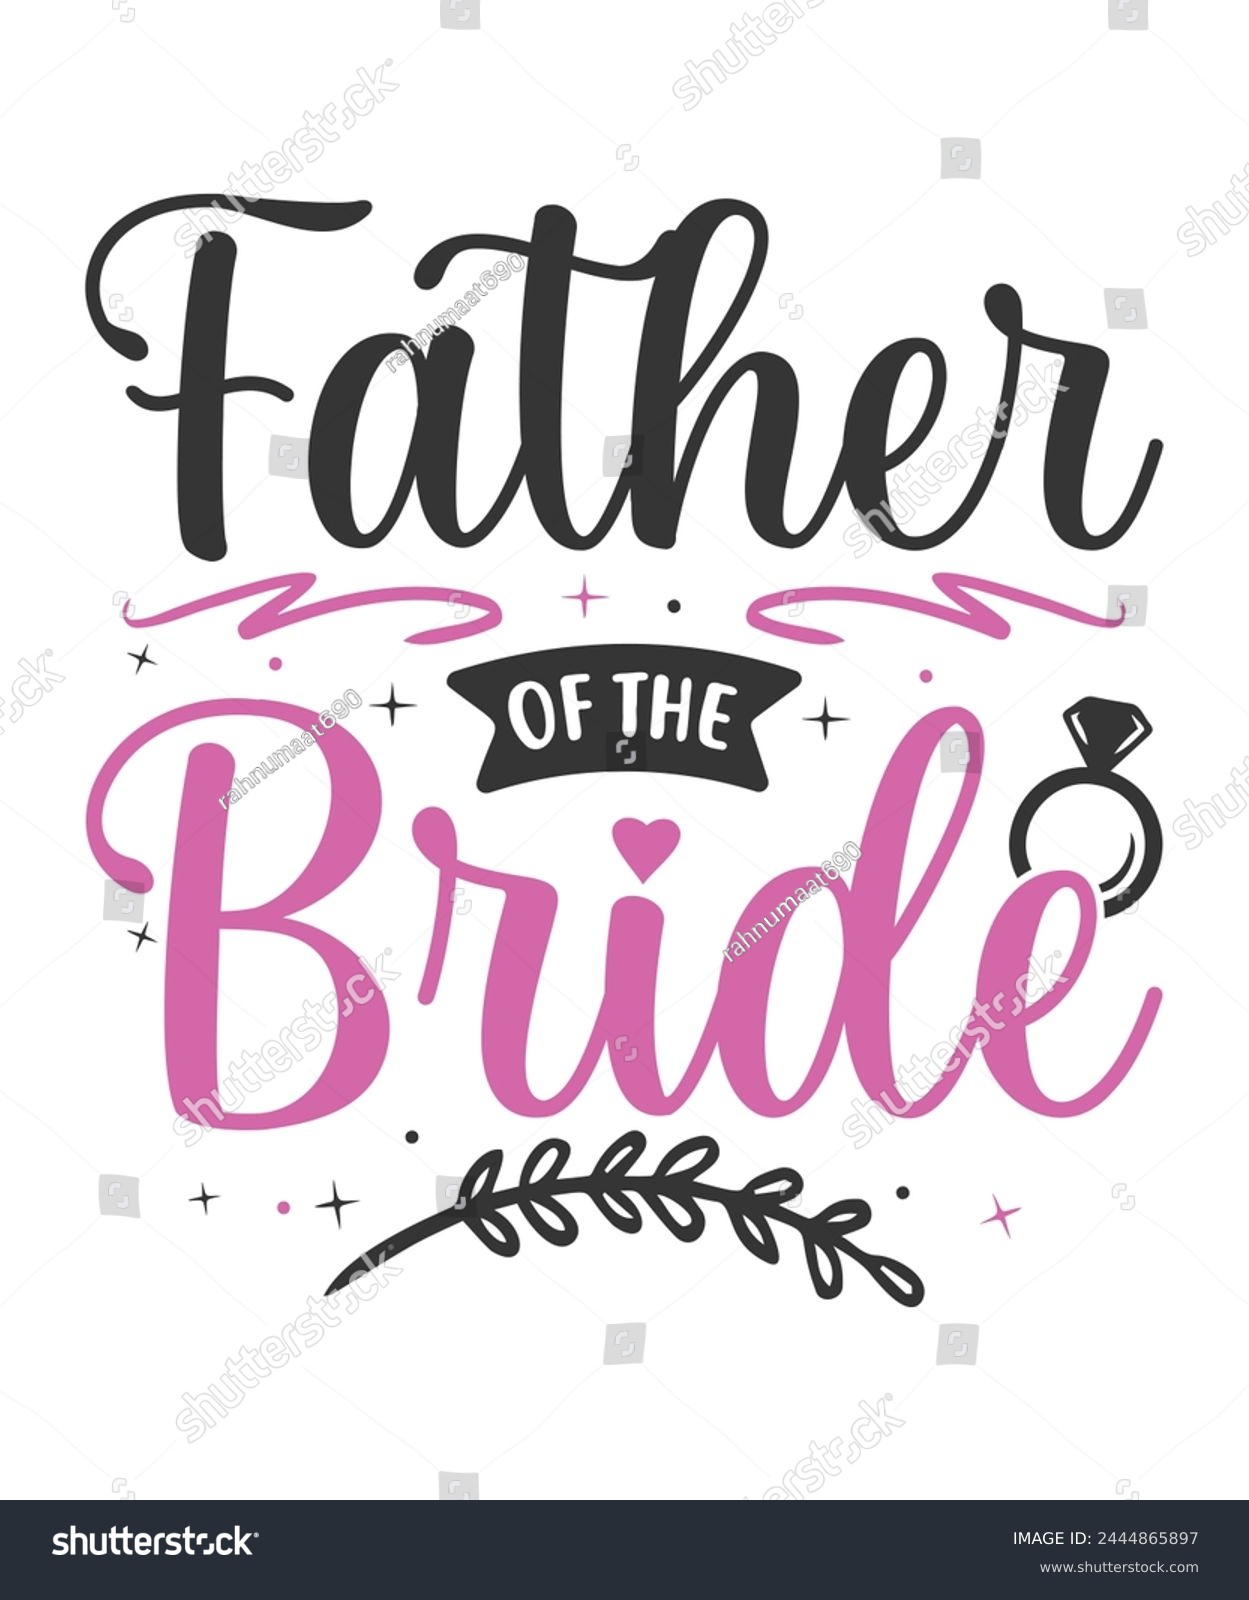 SVG of Father of the bride wedding bride groom svg